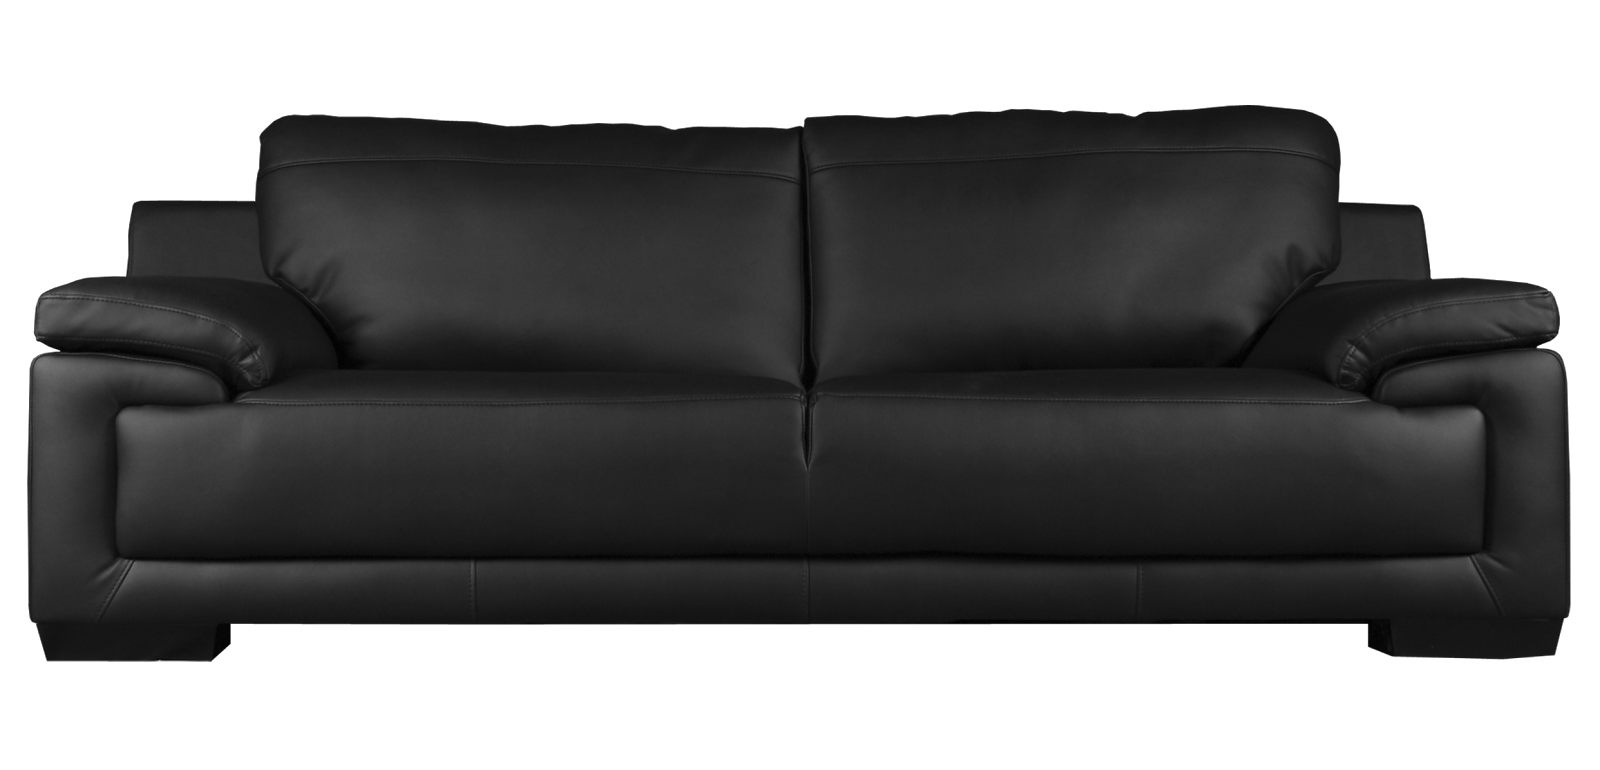 Black Sofa Png Image - Sofa, Transparent background PNG HD thumbnail